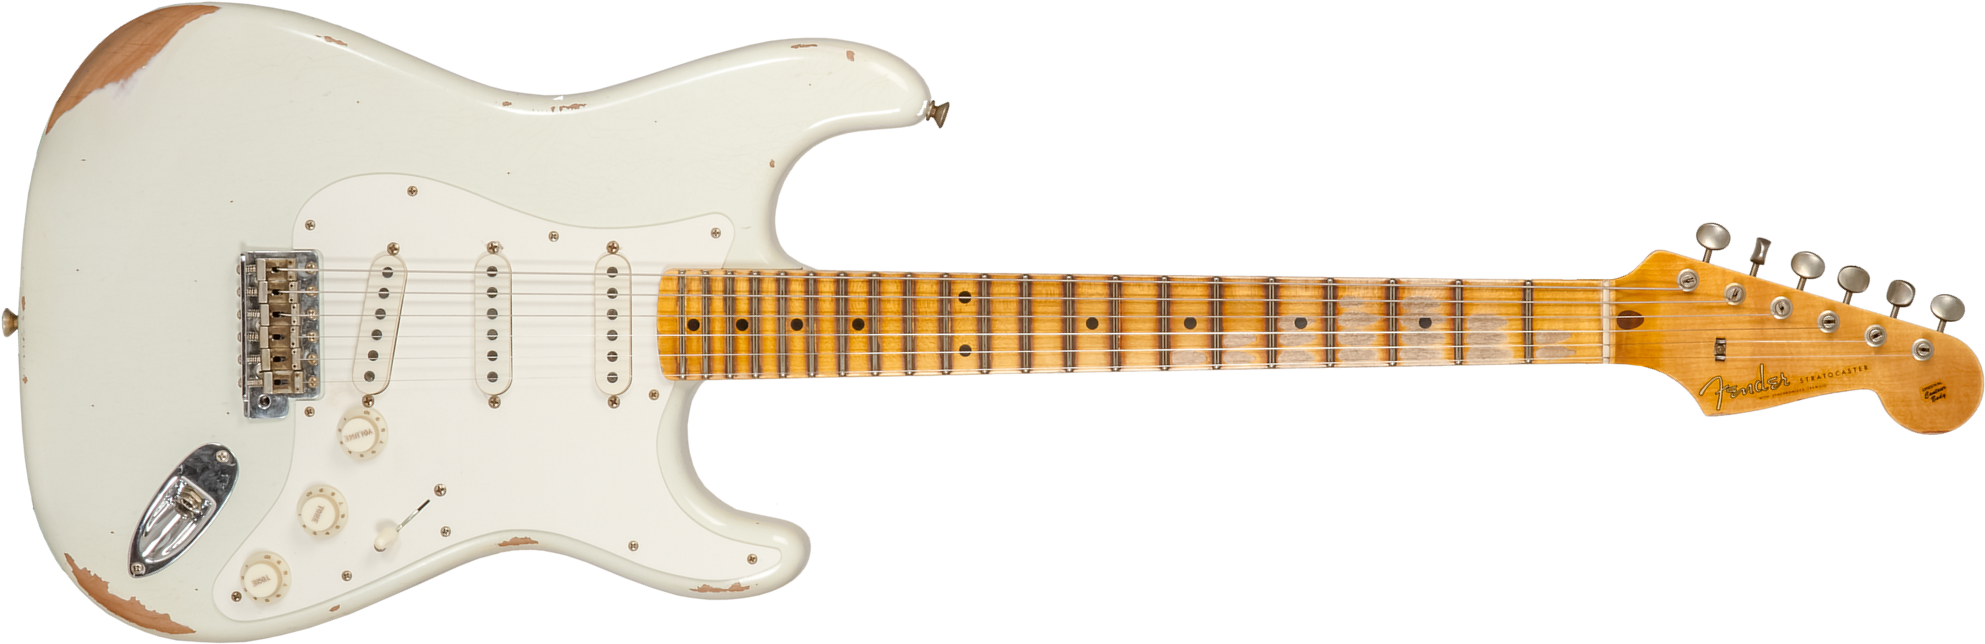 Fender Custom Shop Strat Fat 50's 3s Trem Mn #cz570495 - Relic India Ivory - Guitarra eléctrica con forma de str. - Main picture